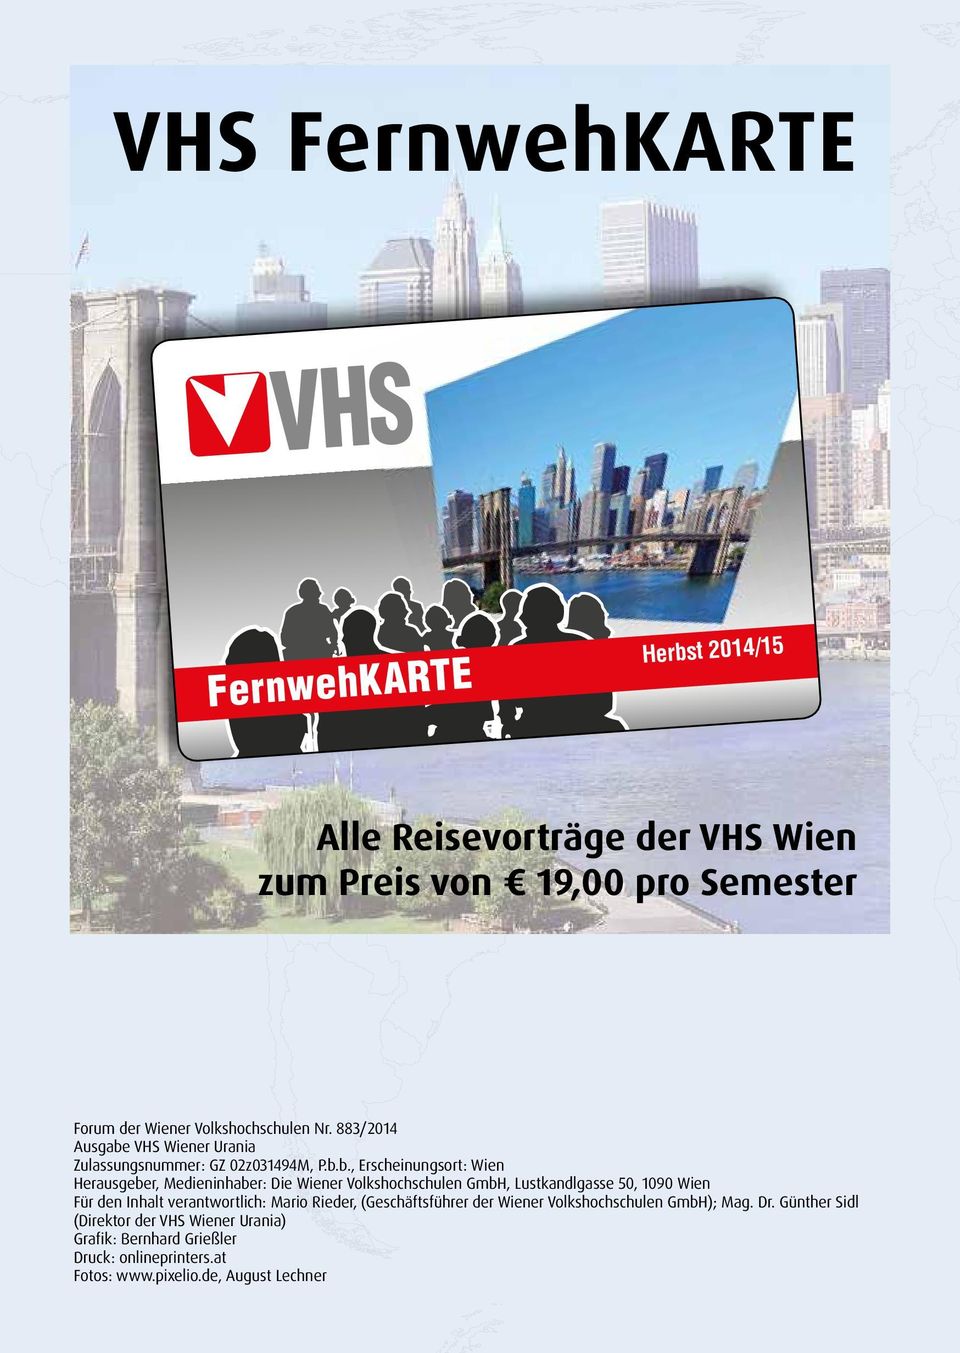 VHS Wiener Urania Zulassungsnummer: GZ 02z031494M, P.b.